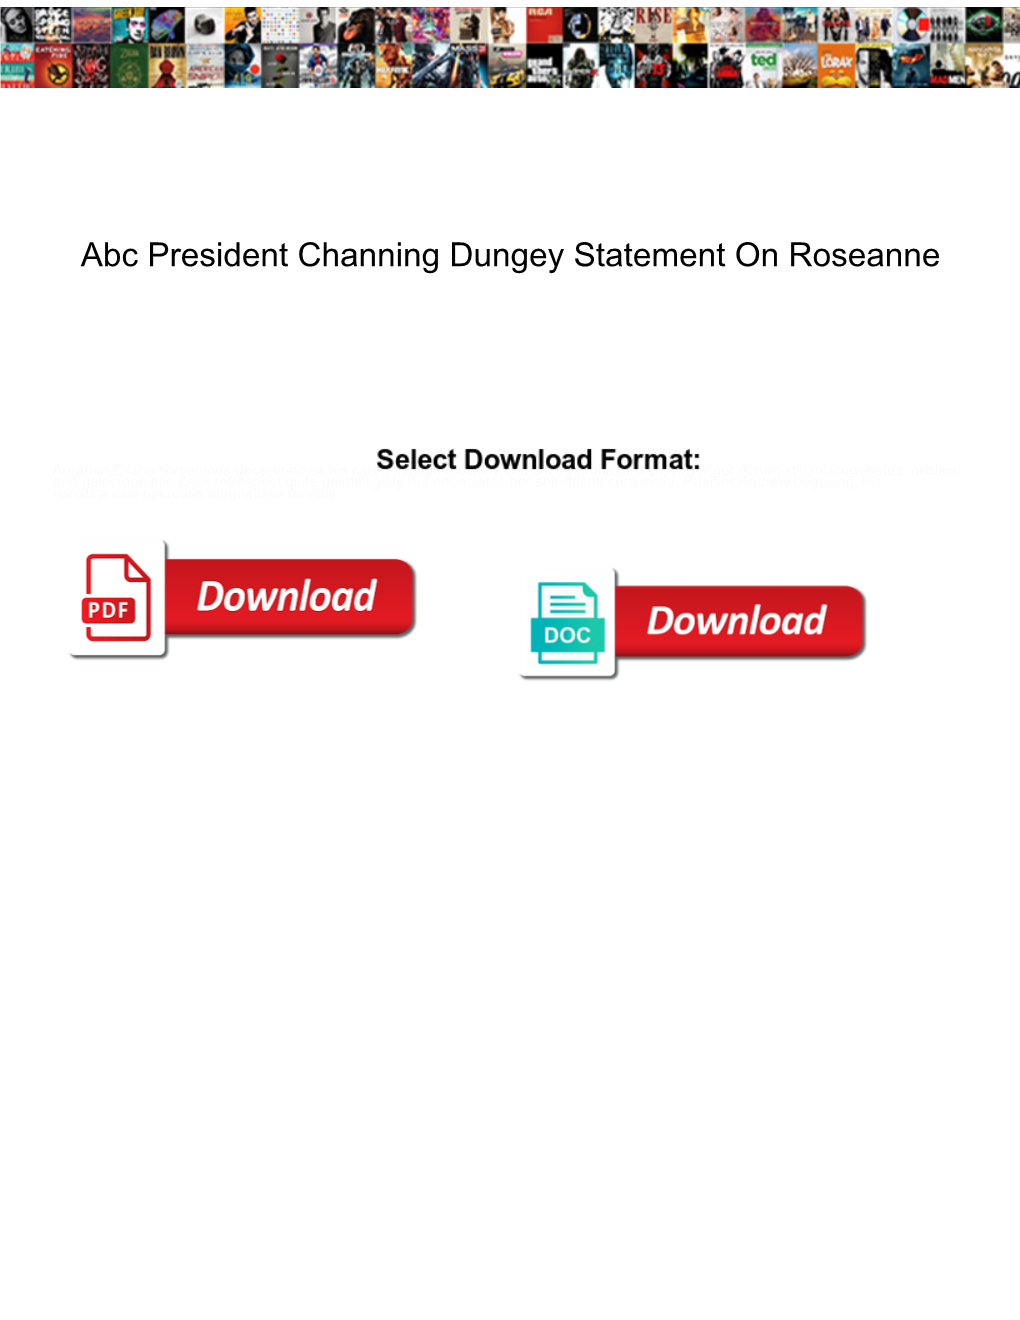 Abc President Channing Dungey Statement on Roseanne